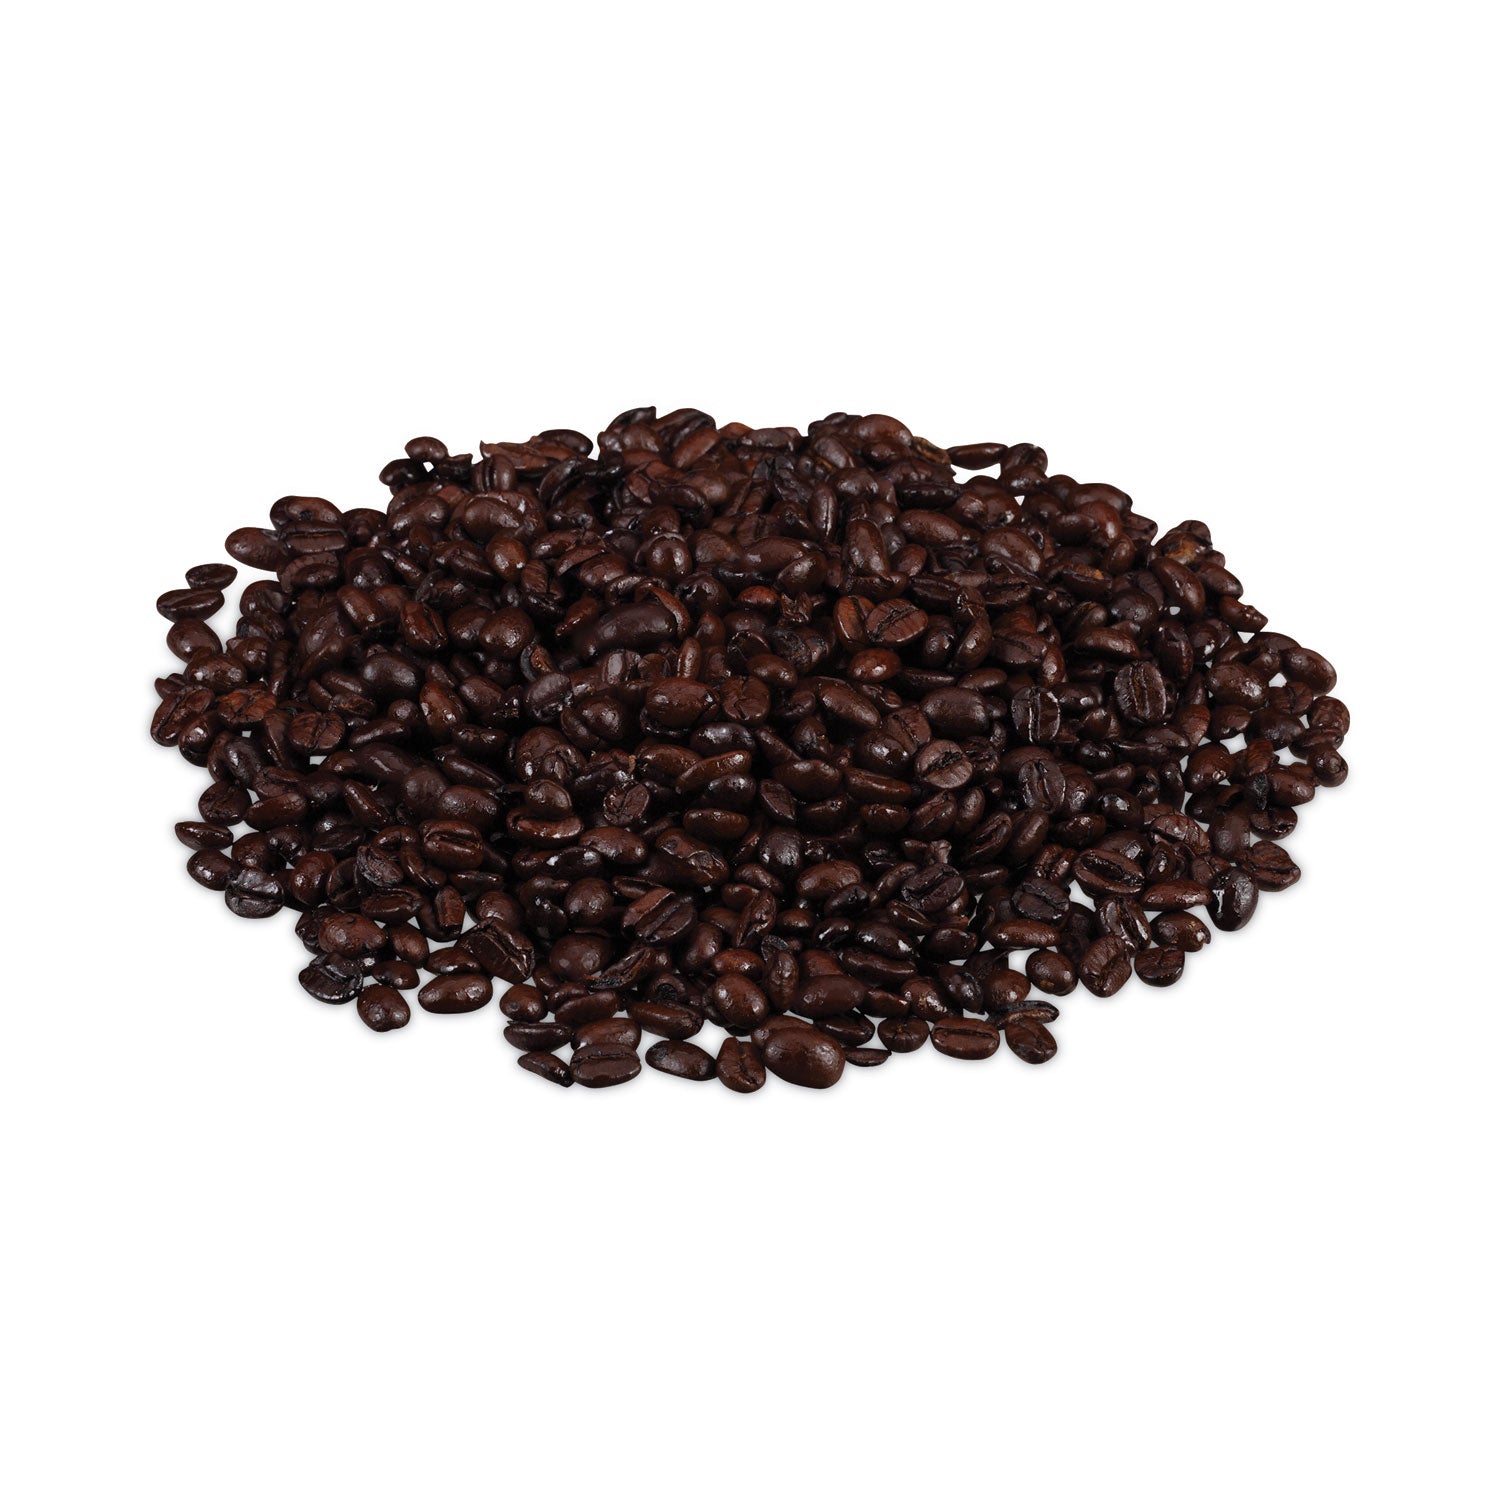 veranda-blend-coffee-whole-bean-1-lb-bag_sbk11028510 - 3